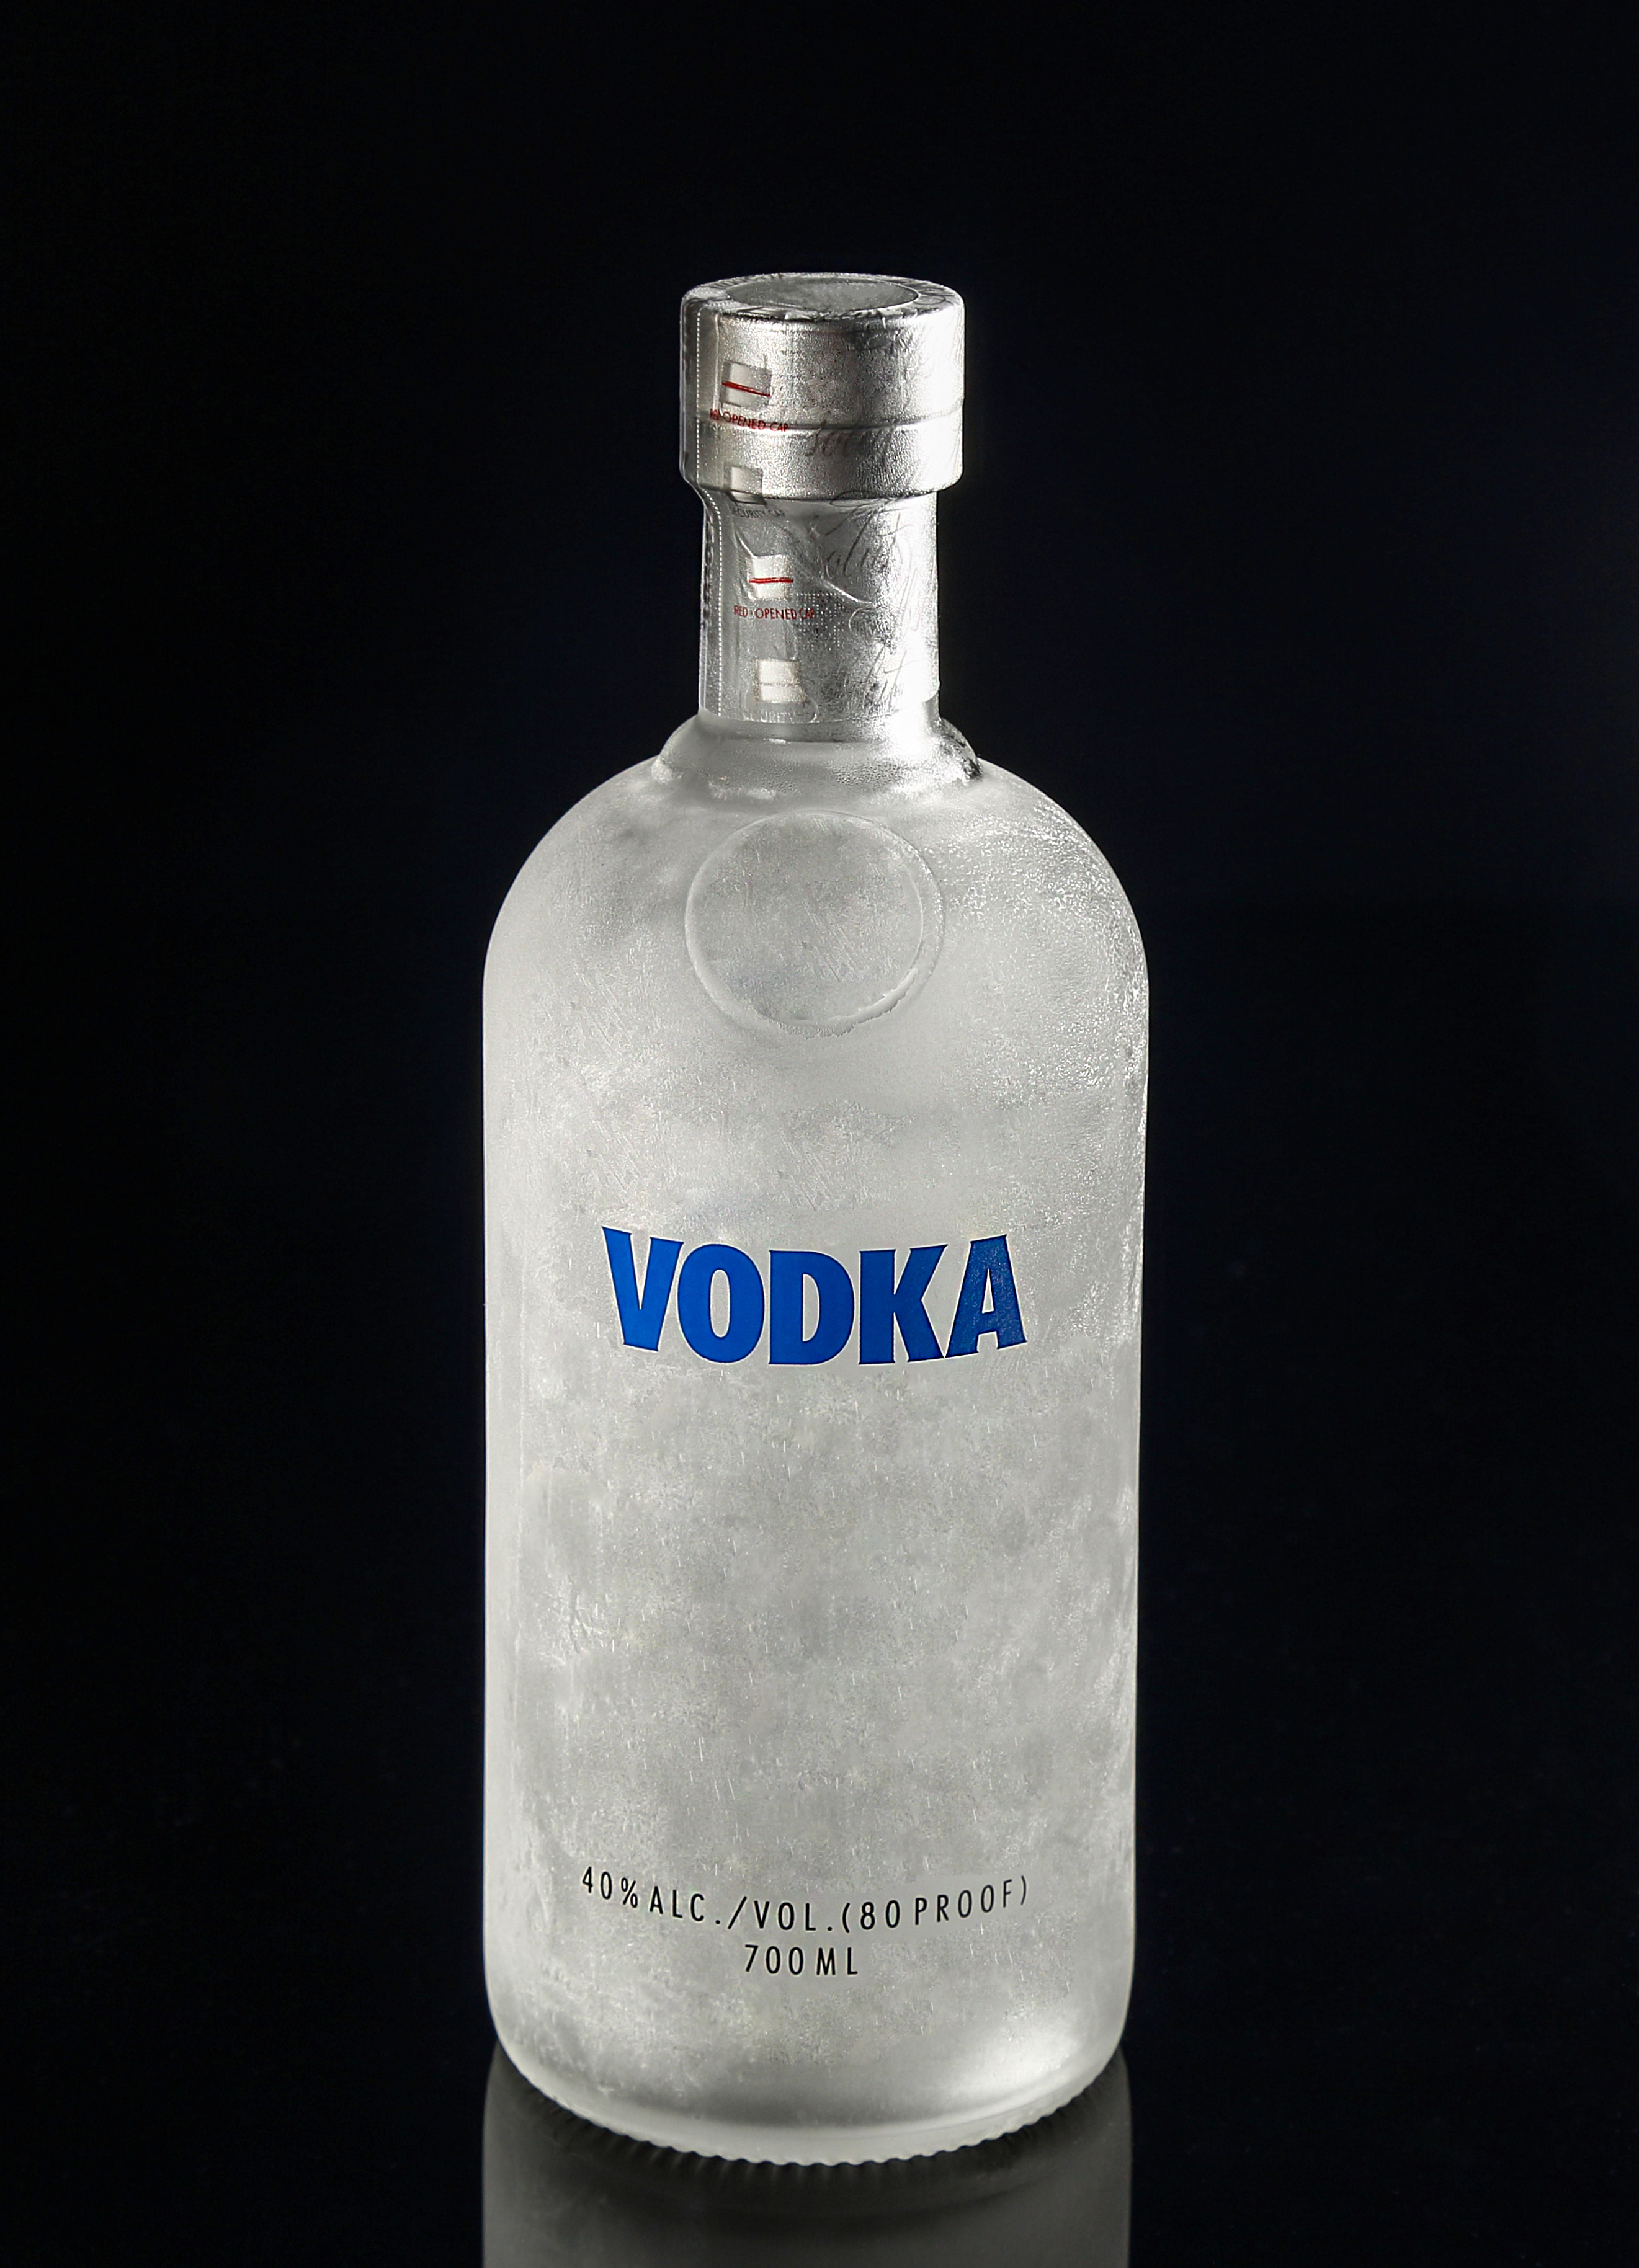 Una botella de vodka | Fuente: Shutterstock